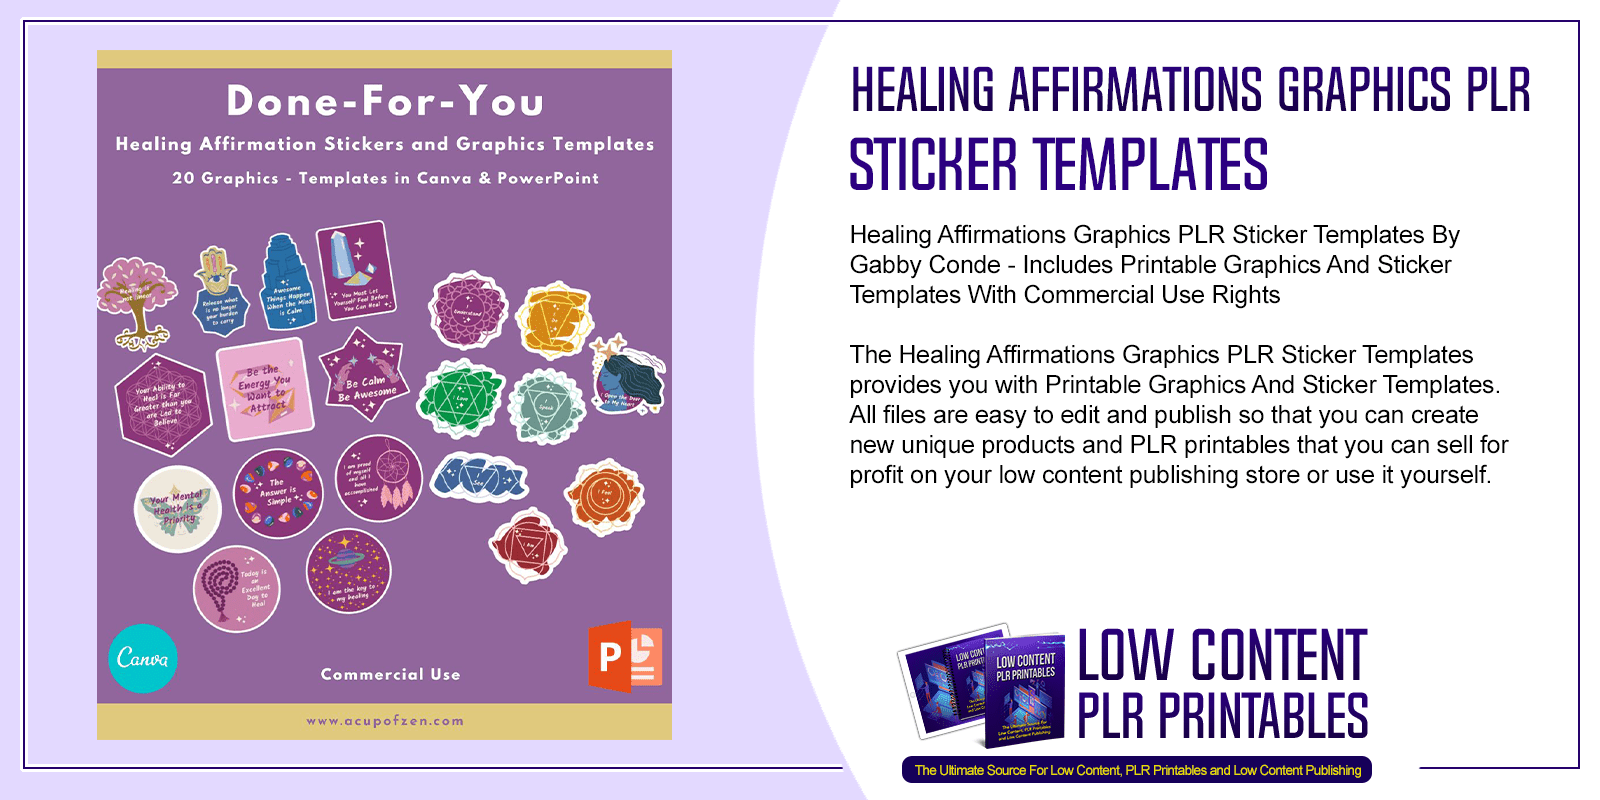 Healing Affirmations Graphics PLR Sticker Templates